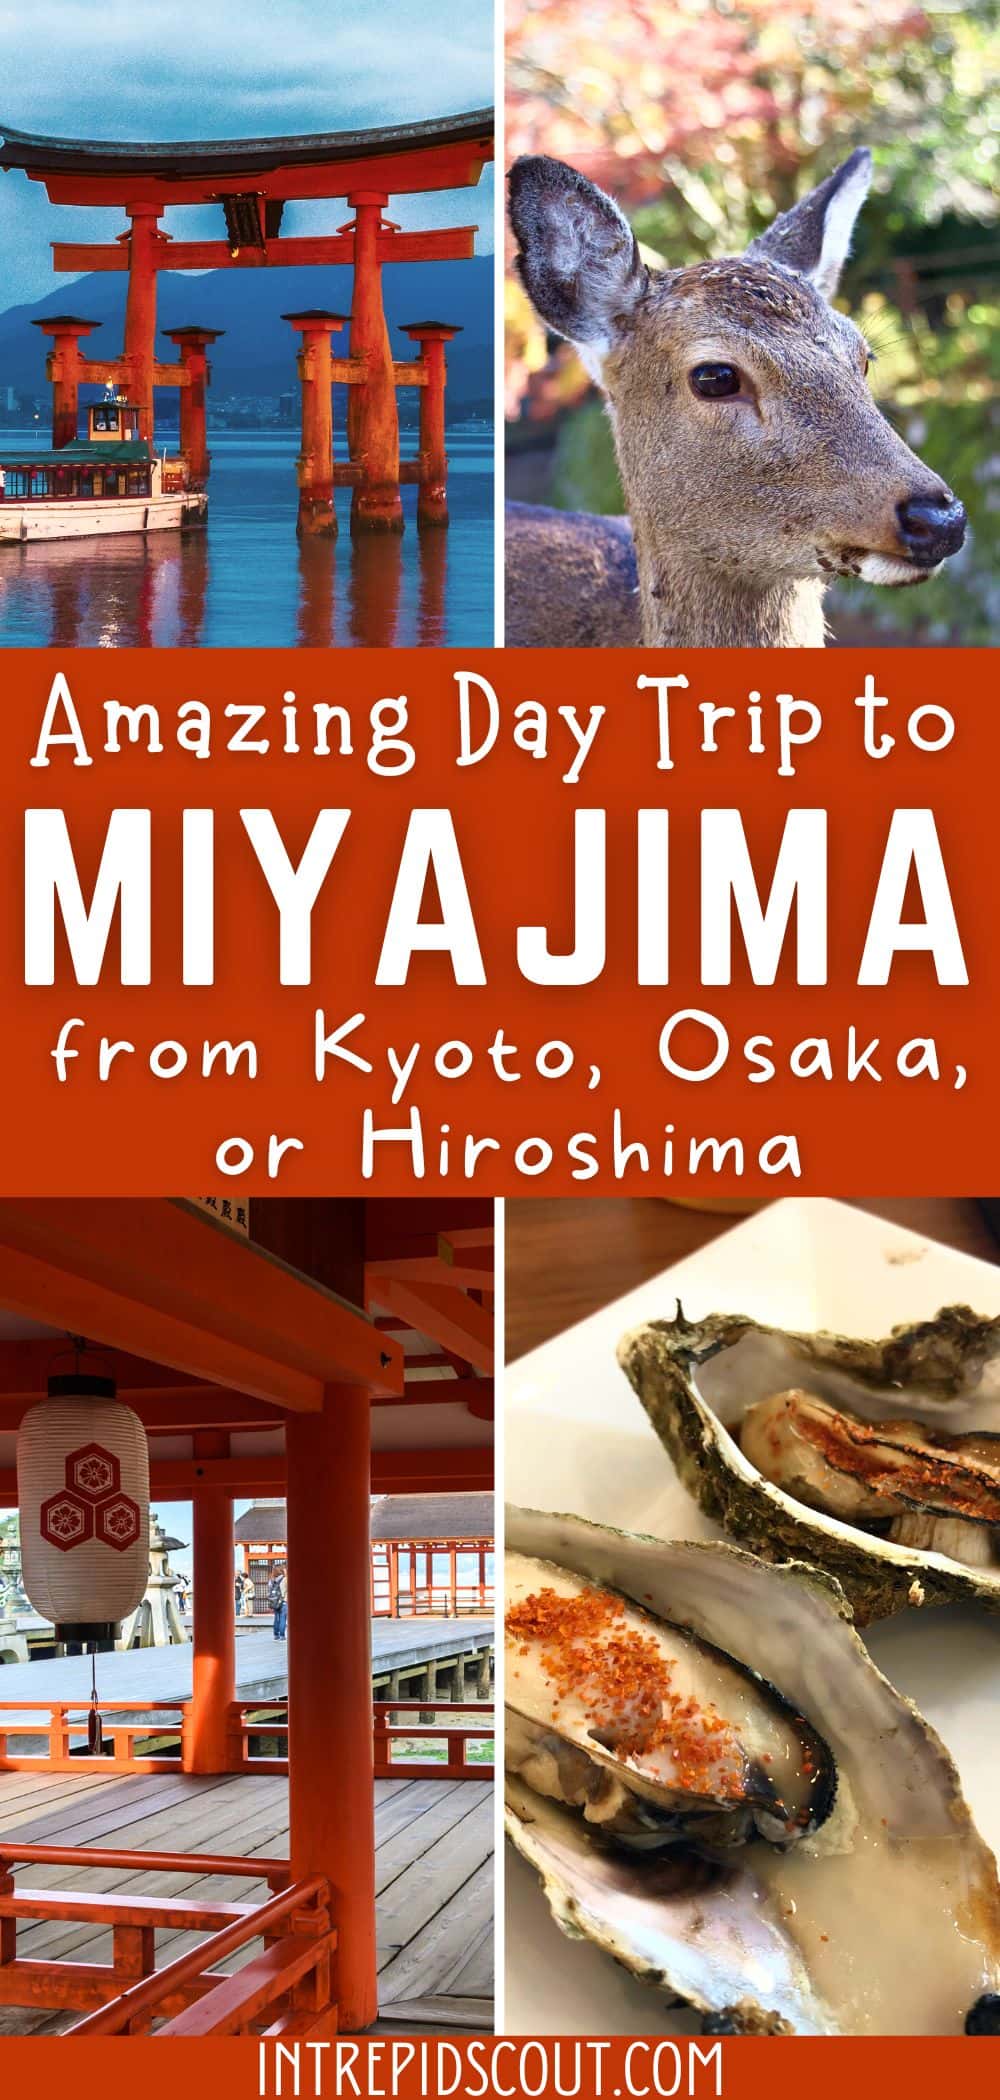 Day Trip to Miyajima from Kyoto, Osaka, or Hiroshima